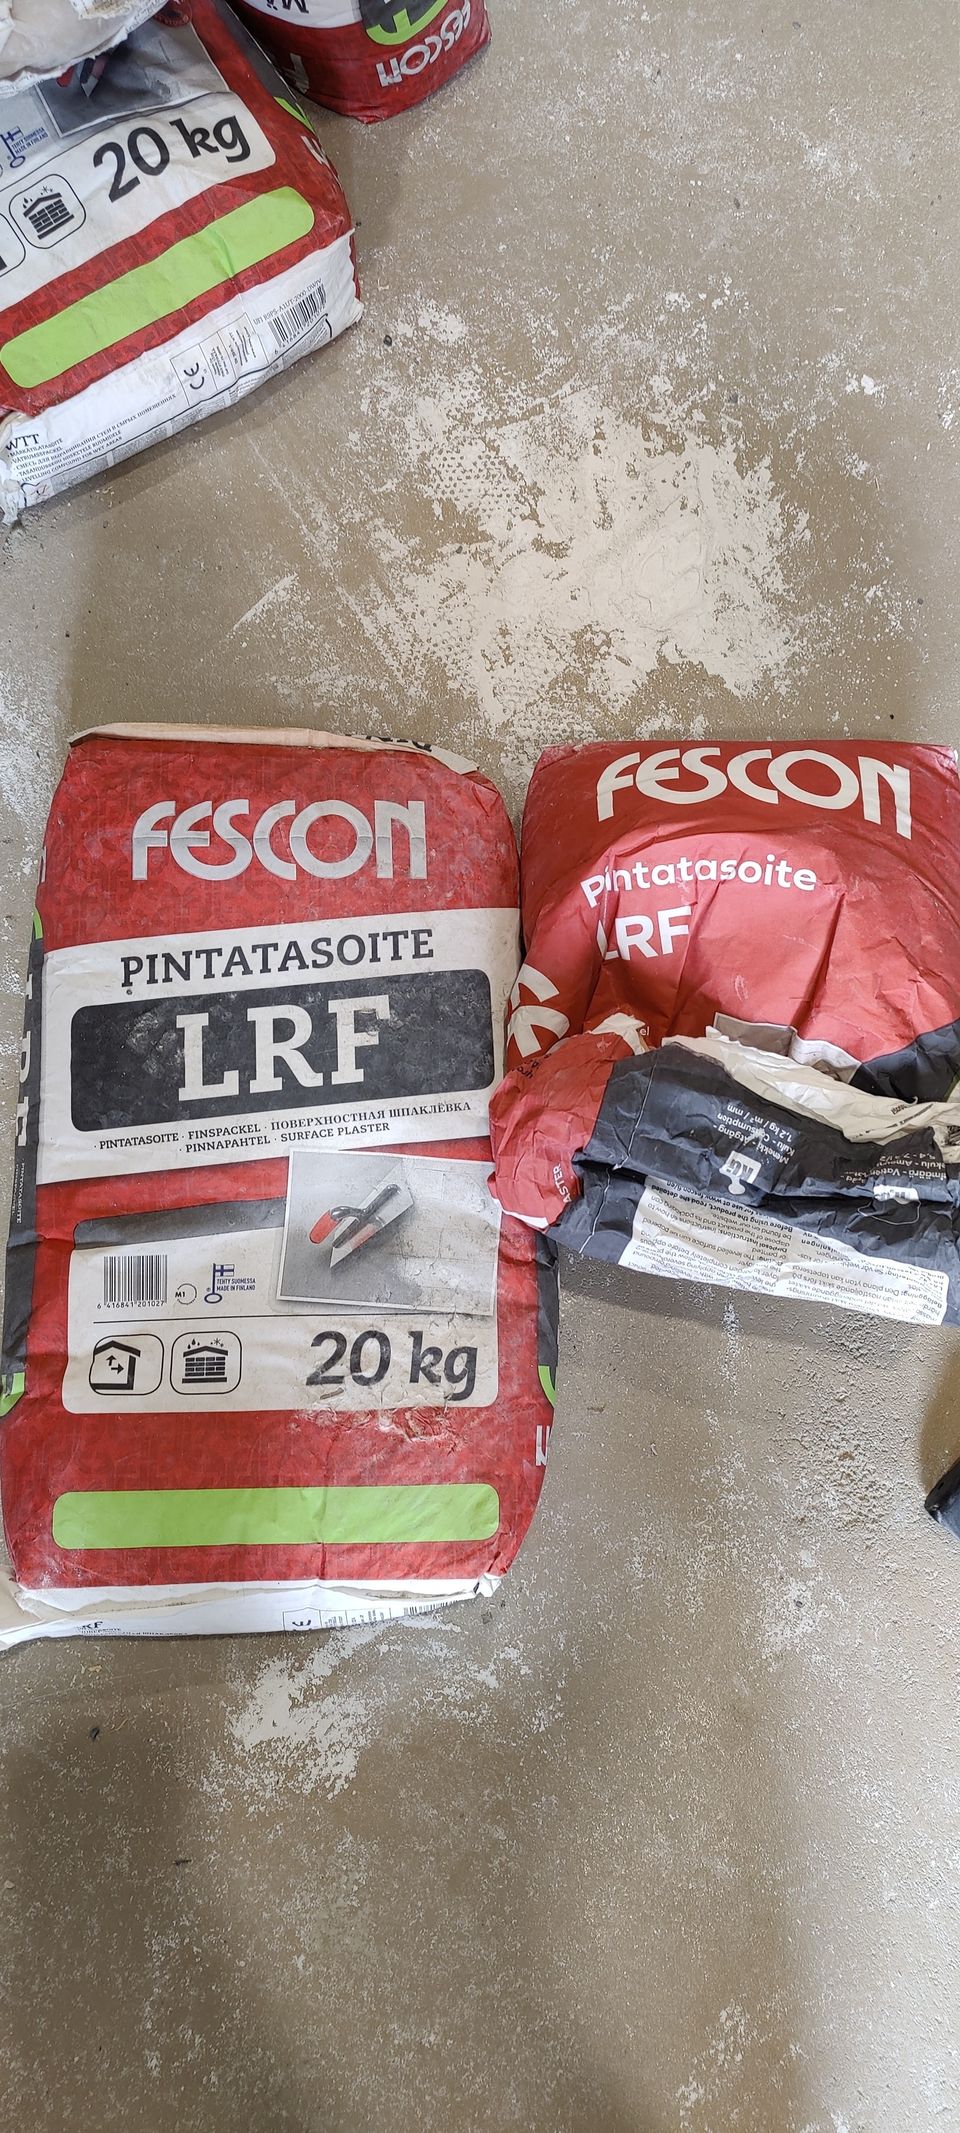 Fescon pintatasoite LRF